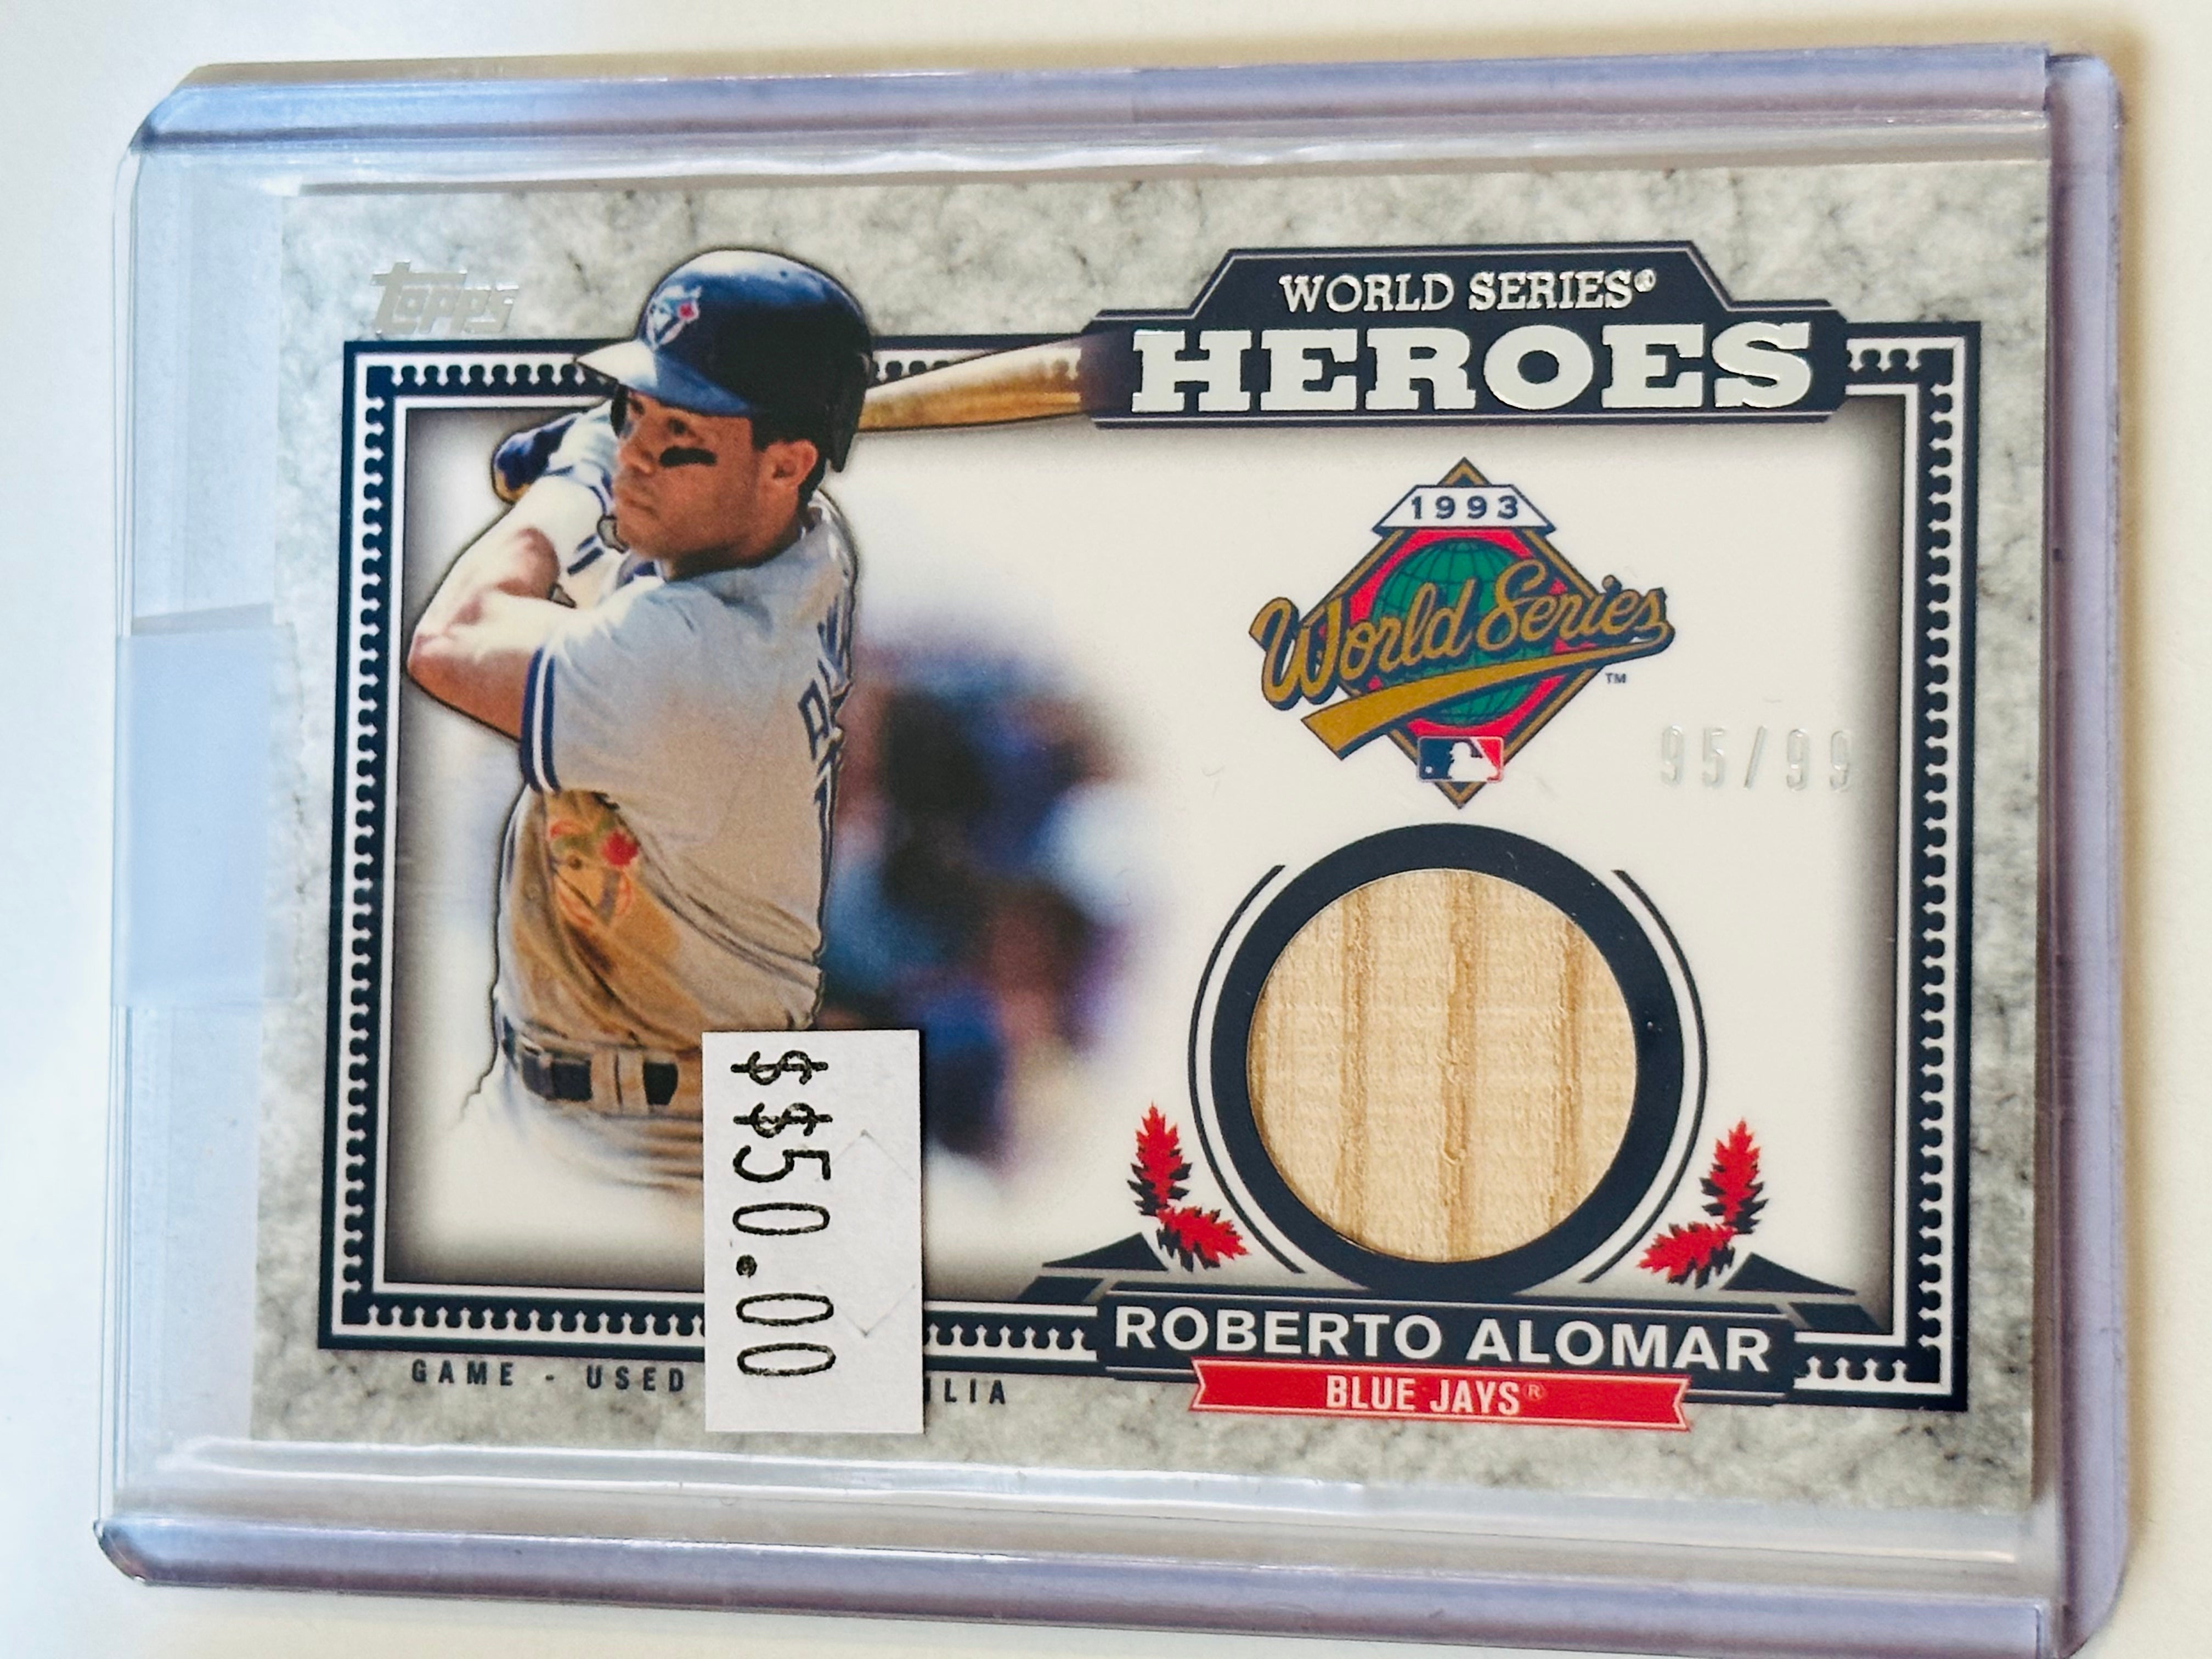 Blue jays Roberto Alomar World Series numbered bat insert card 95/99